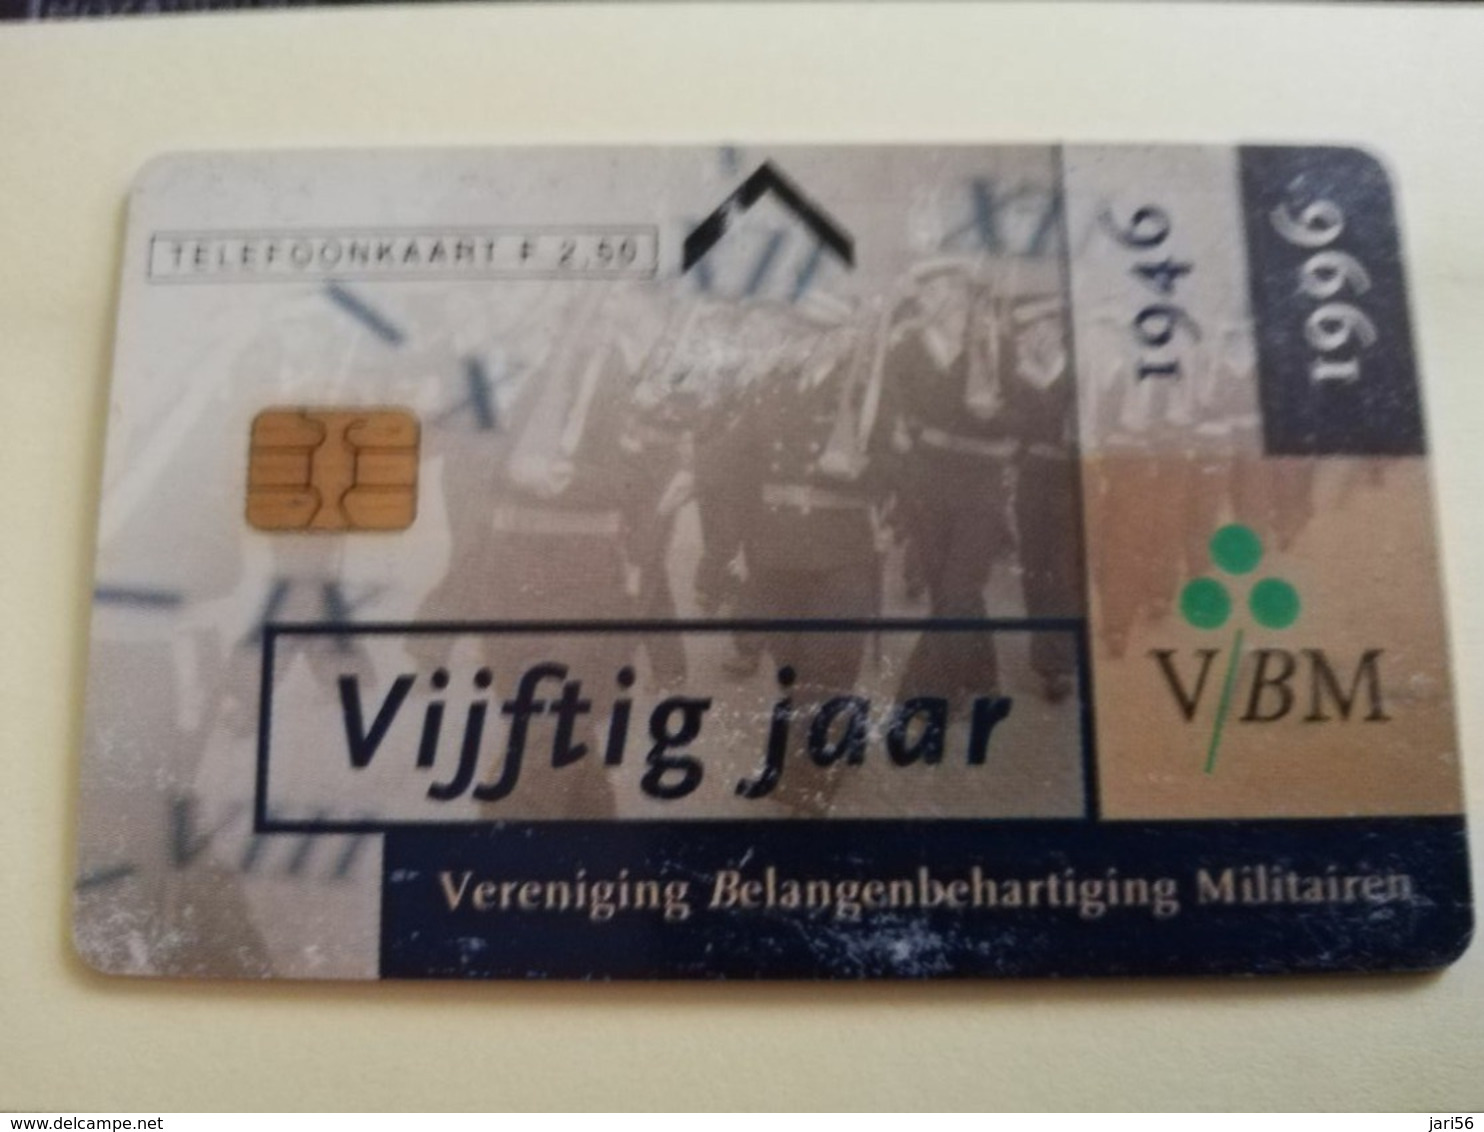 NETHERLANDS  ADVERTISING CHIPCARD HFL 2,50   CRD 275  VIJFTIG JAAR VBM VAKBOND MILITAIREN          Fine Used   ** 3209** - Privadas